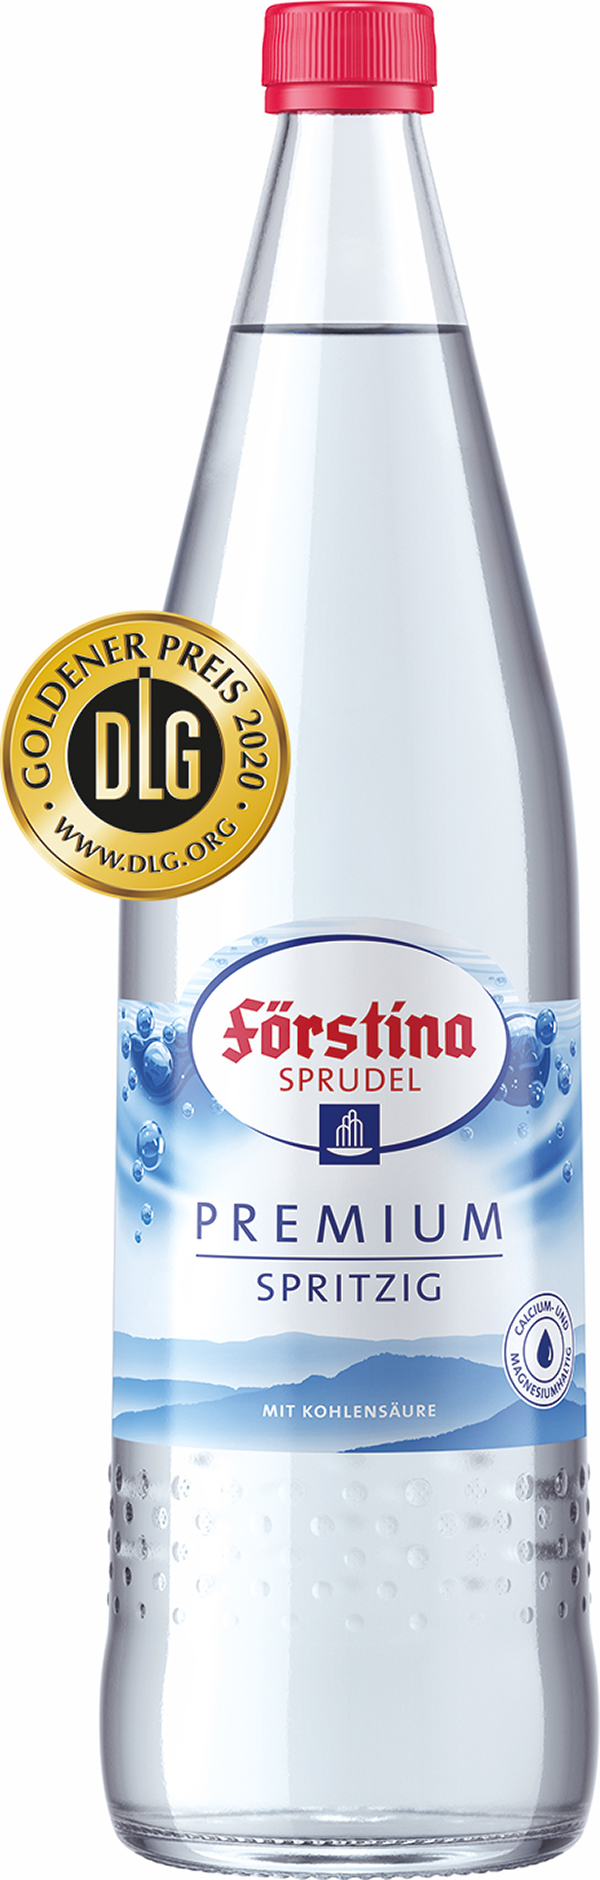 Förstina Sprudel Premium Spritzig 12 x 0,7 l